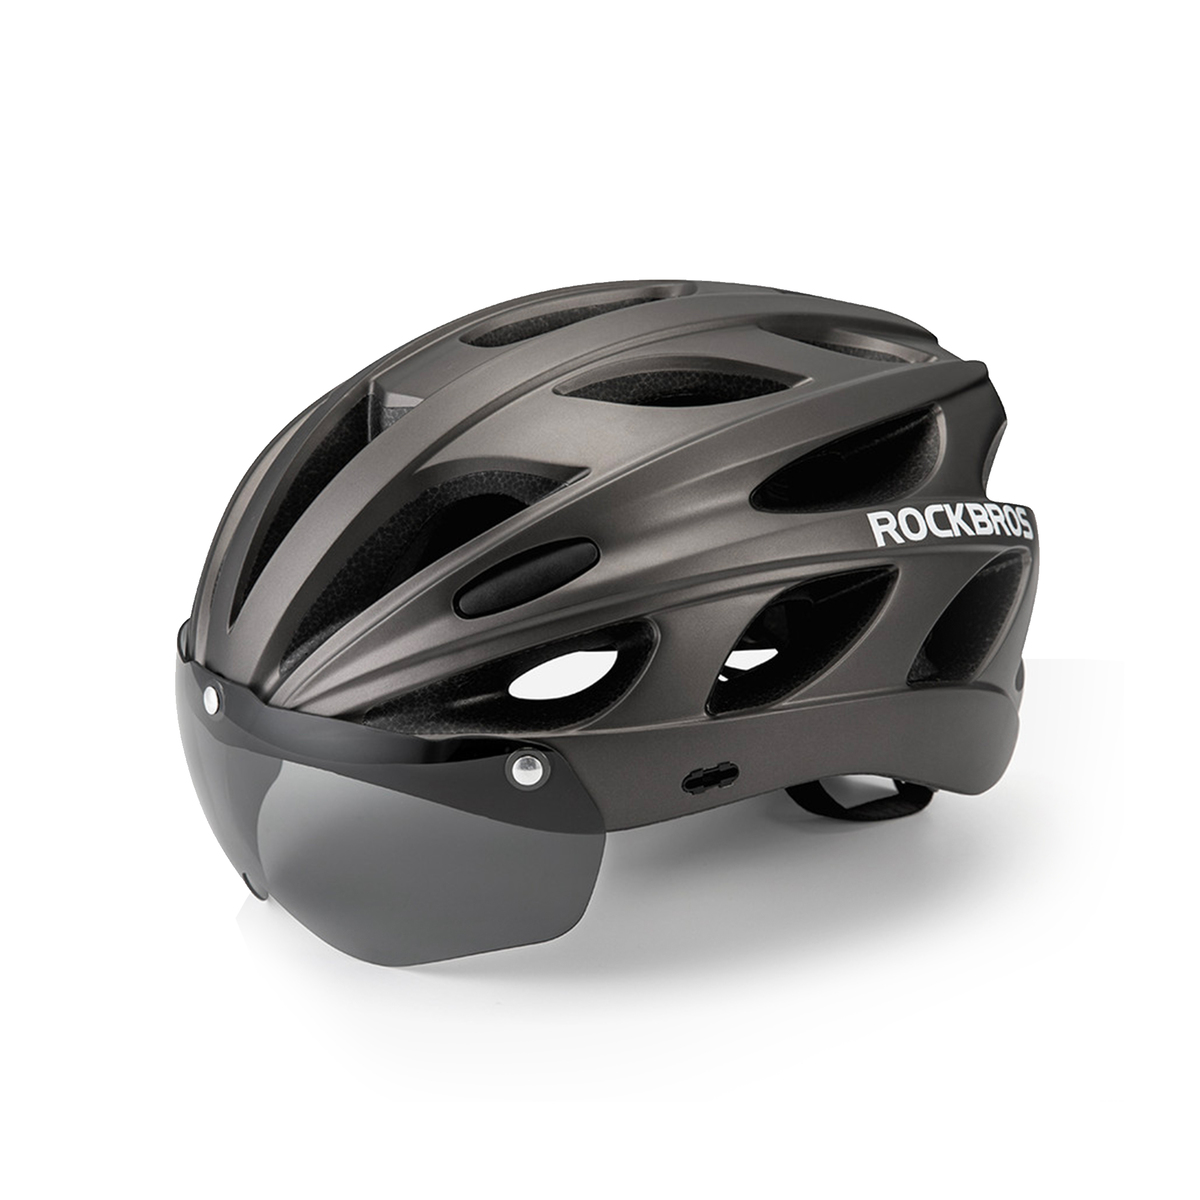 Rockbros Cycling Helmet With Goggle TT-16-TI